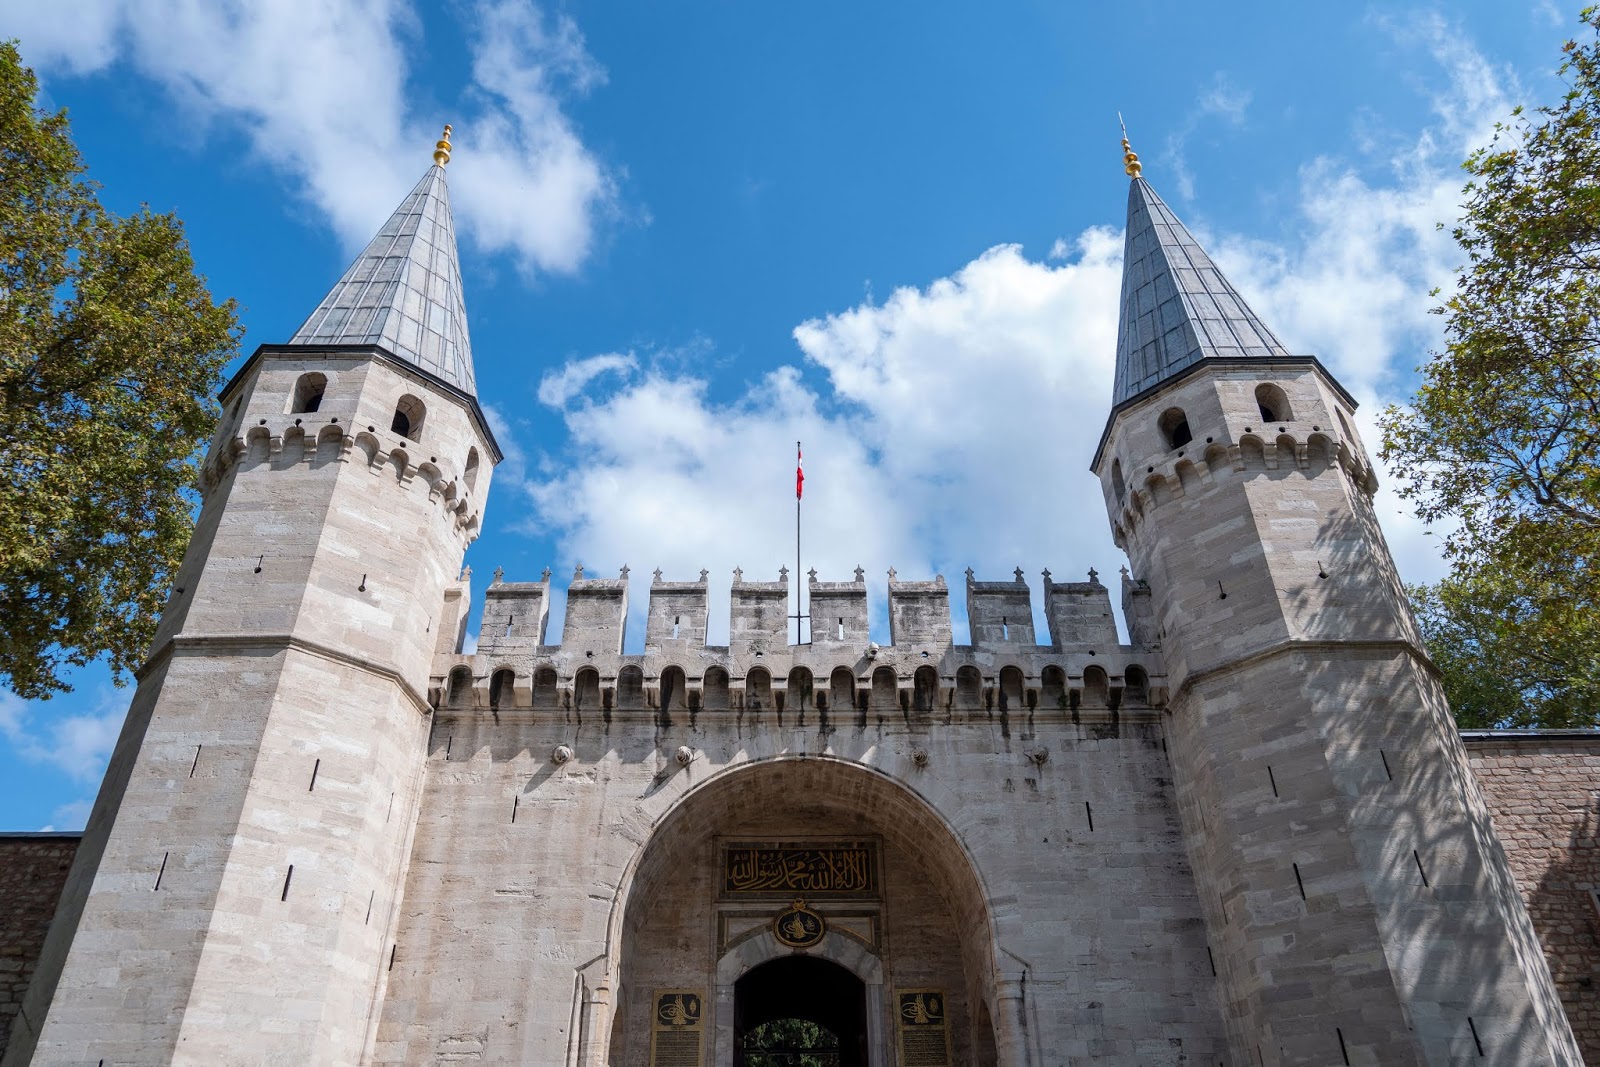 The Topkapi Palace in Istanbul, Turkey